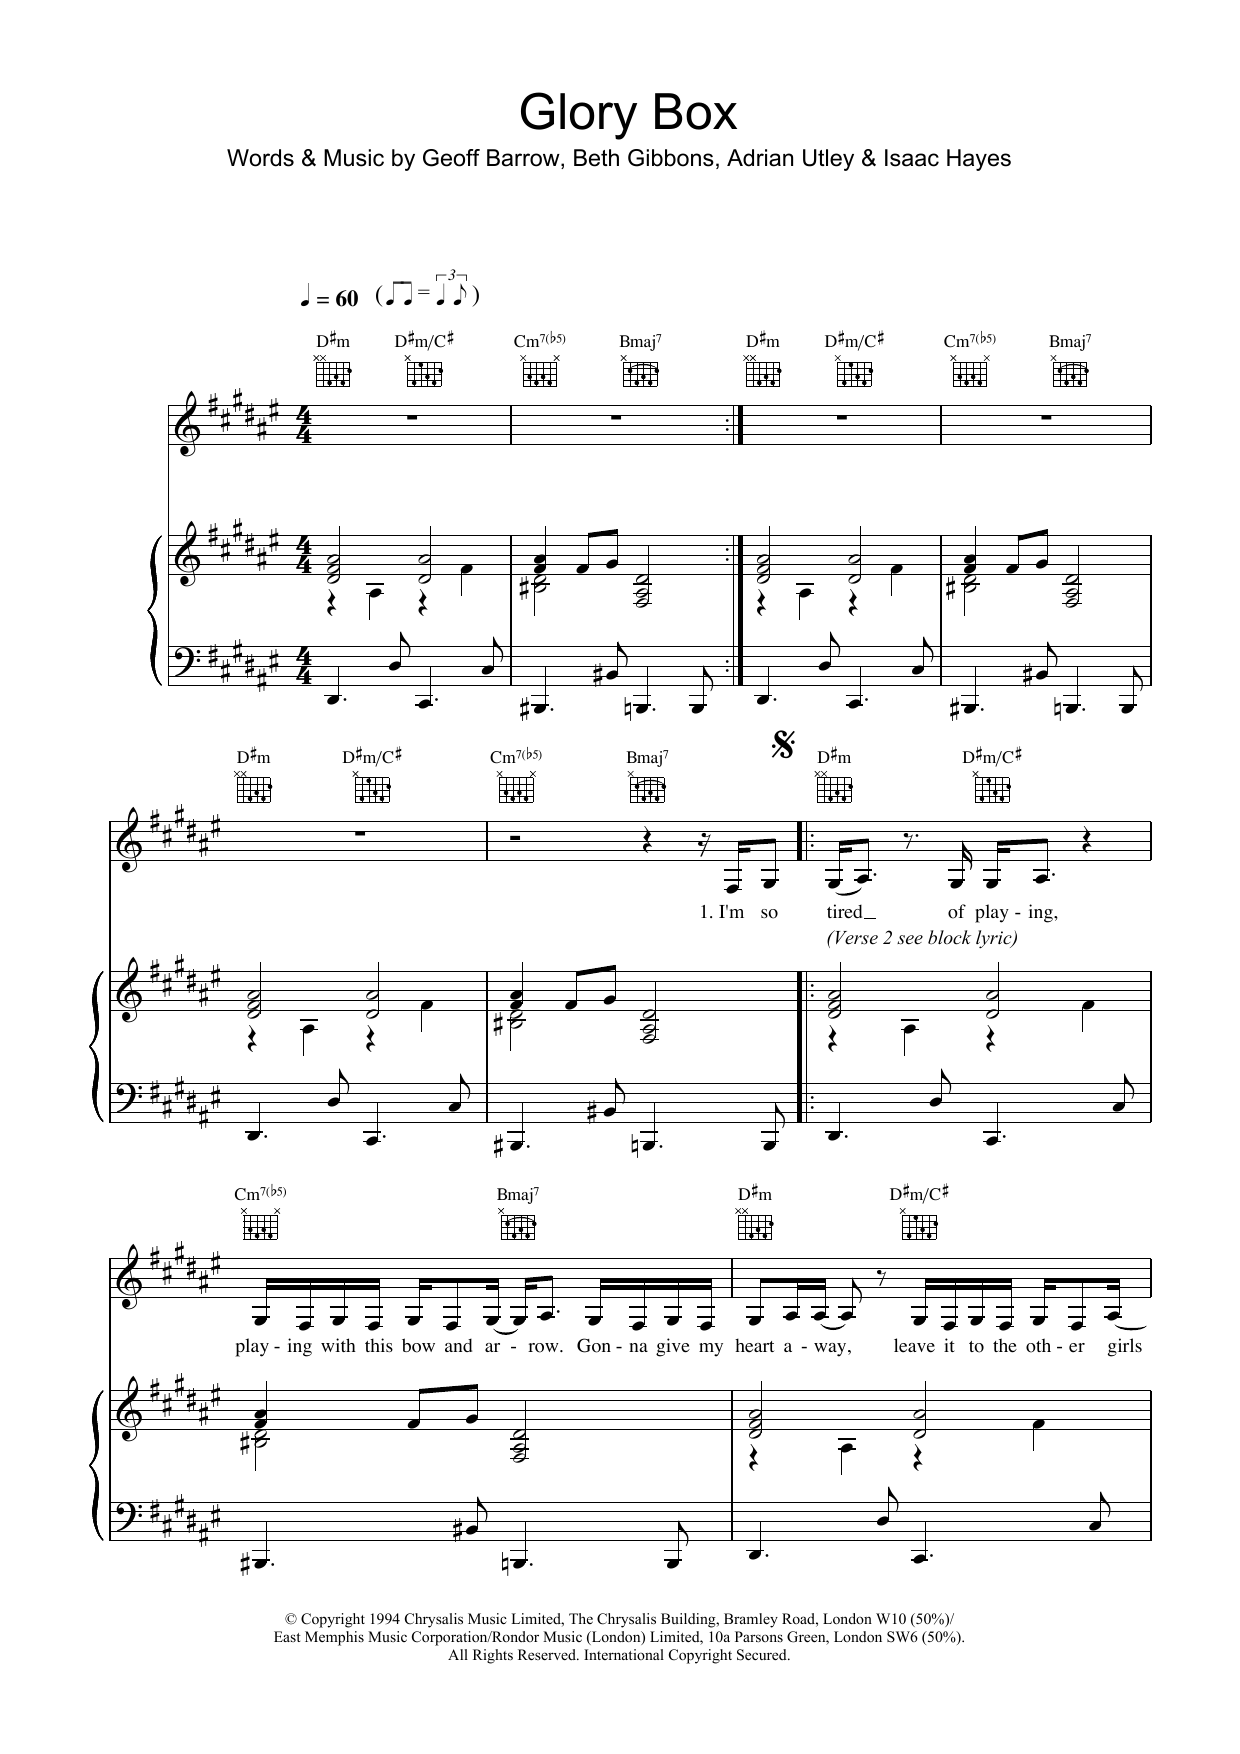 Portishead Glory Box Sheet Music Notes & Chords for Lyrics & Piano Chords - Download or Print PDF